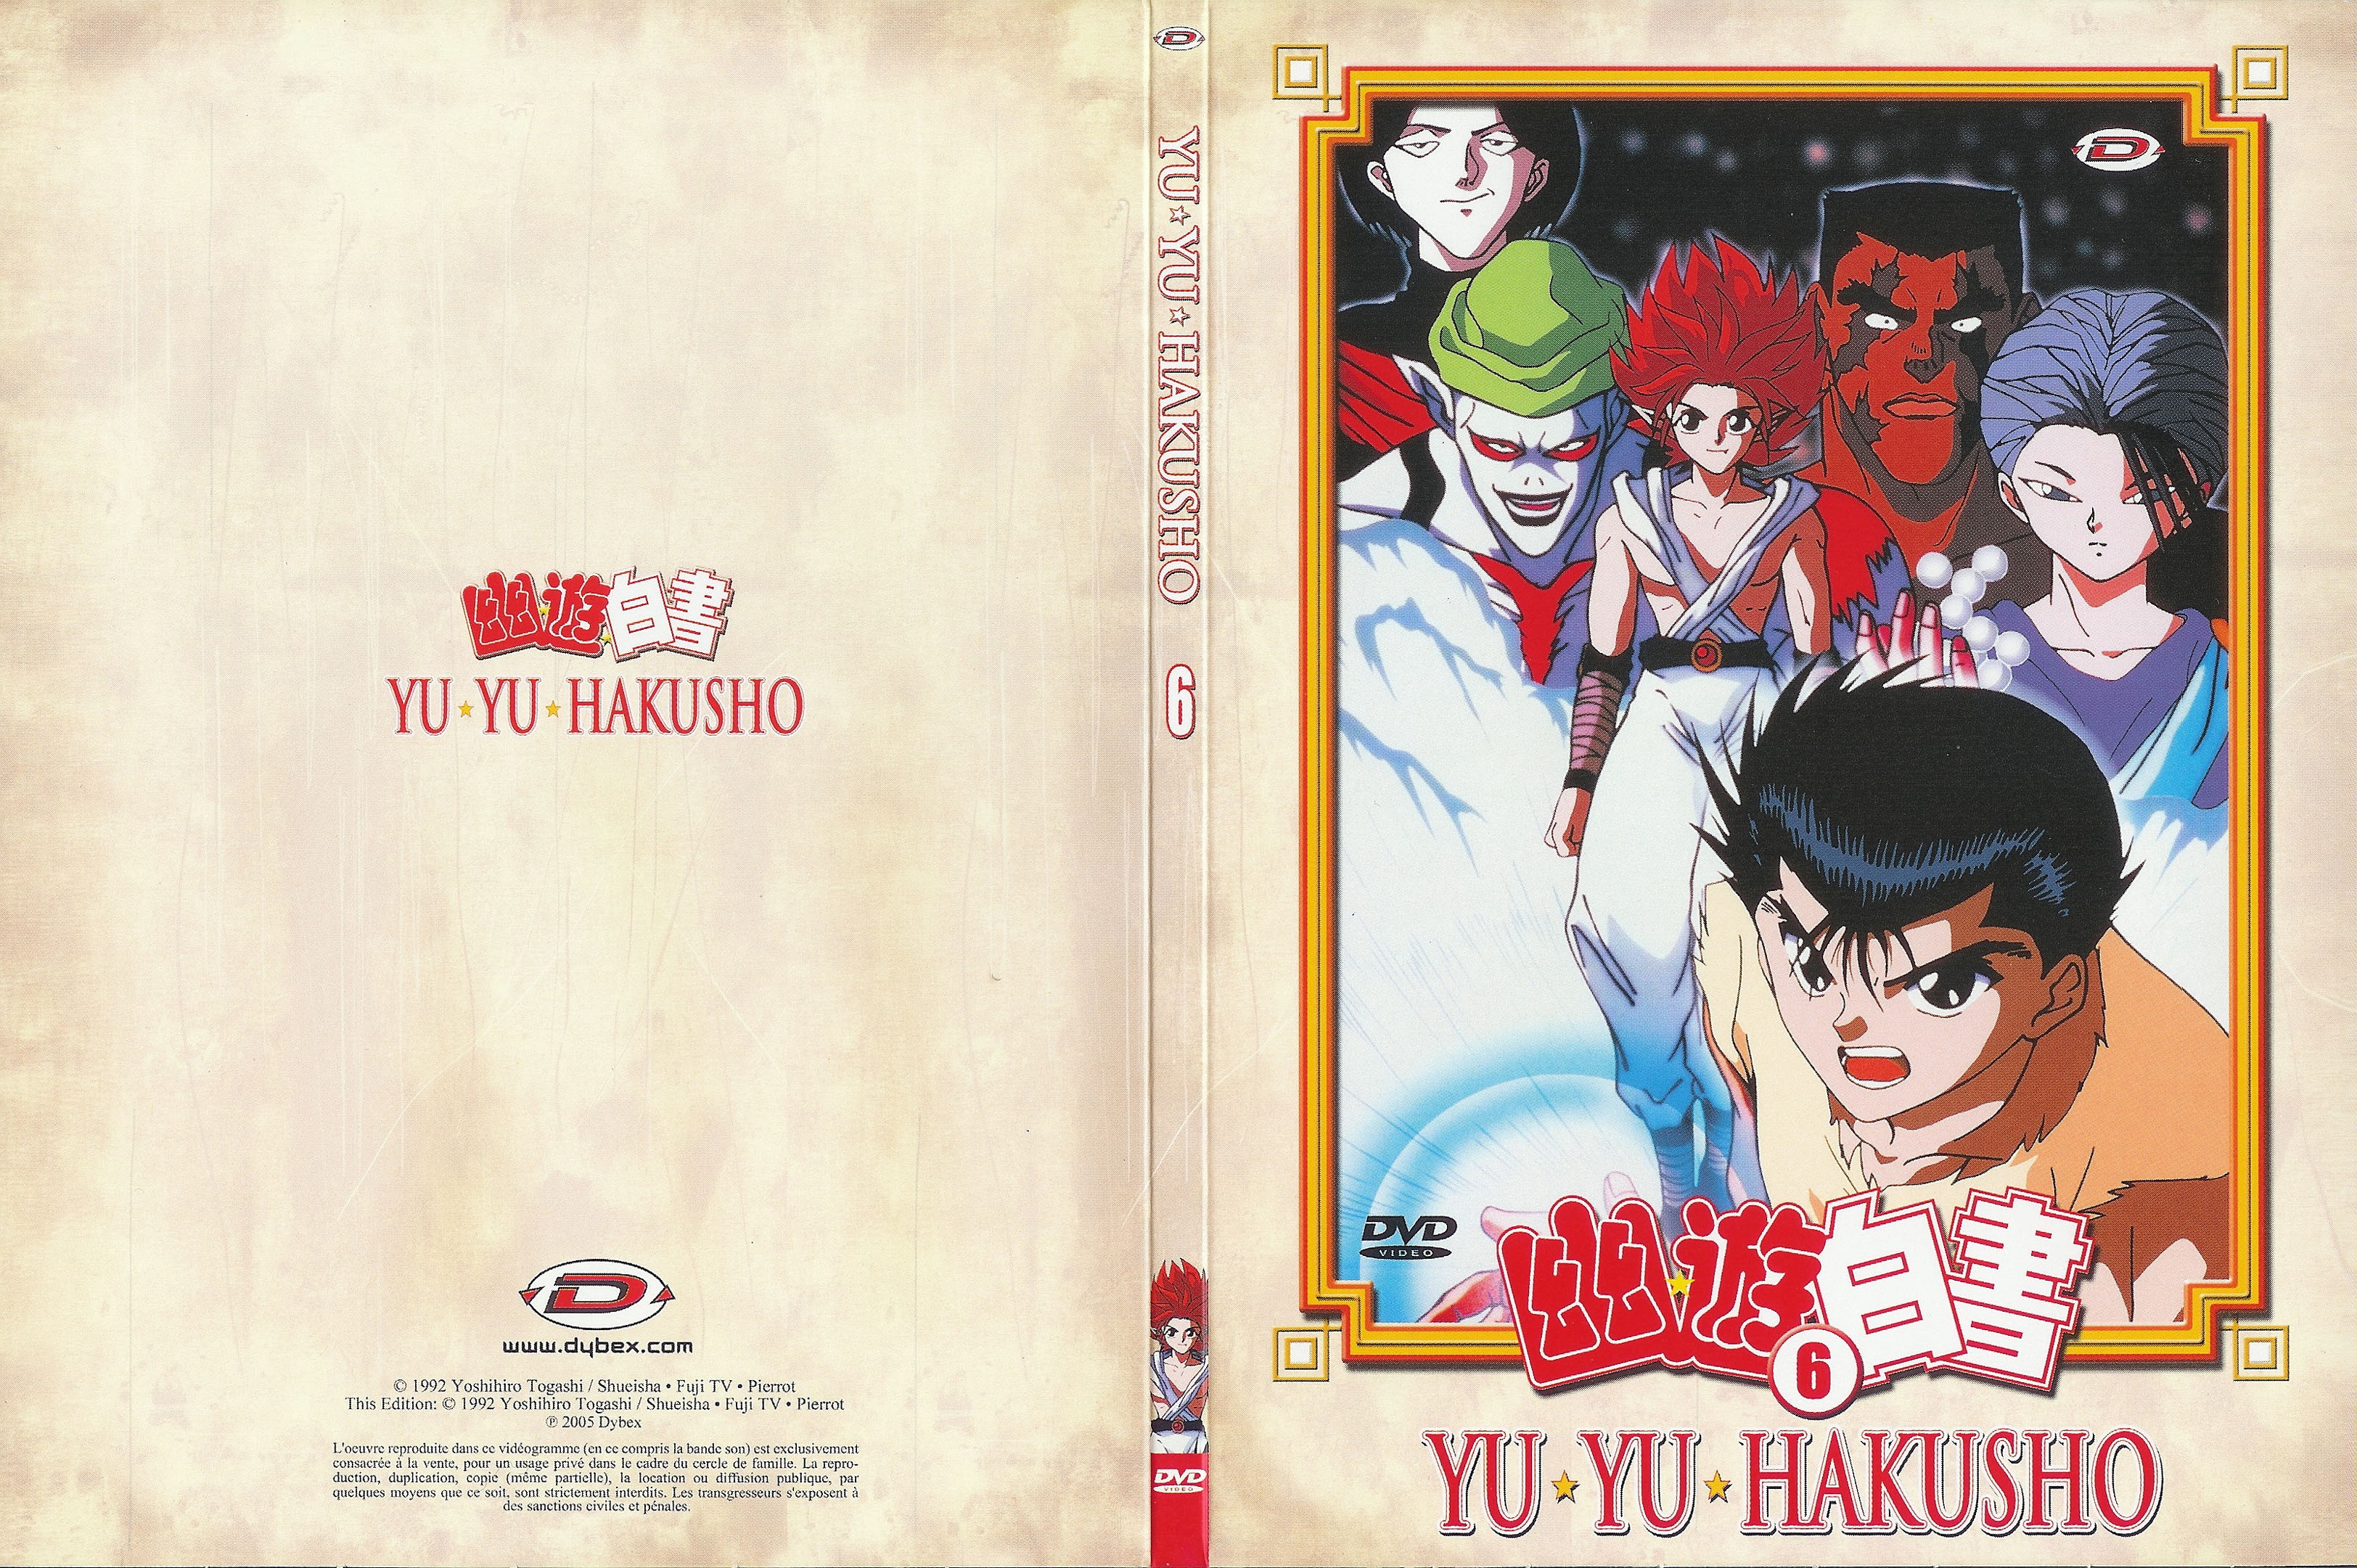 Jaquette DVD Yu yu hakusho vol 06